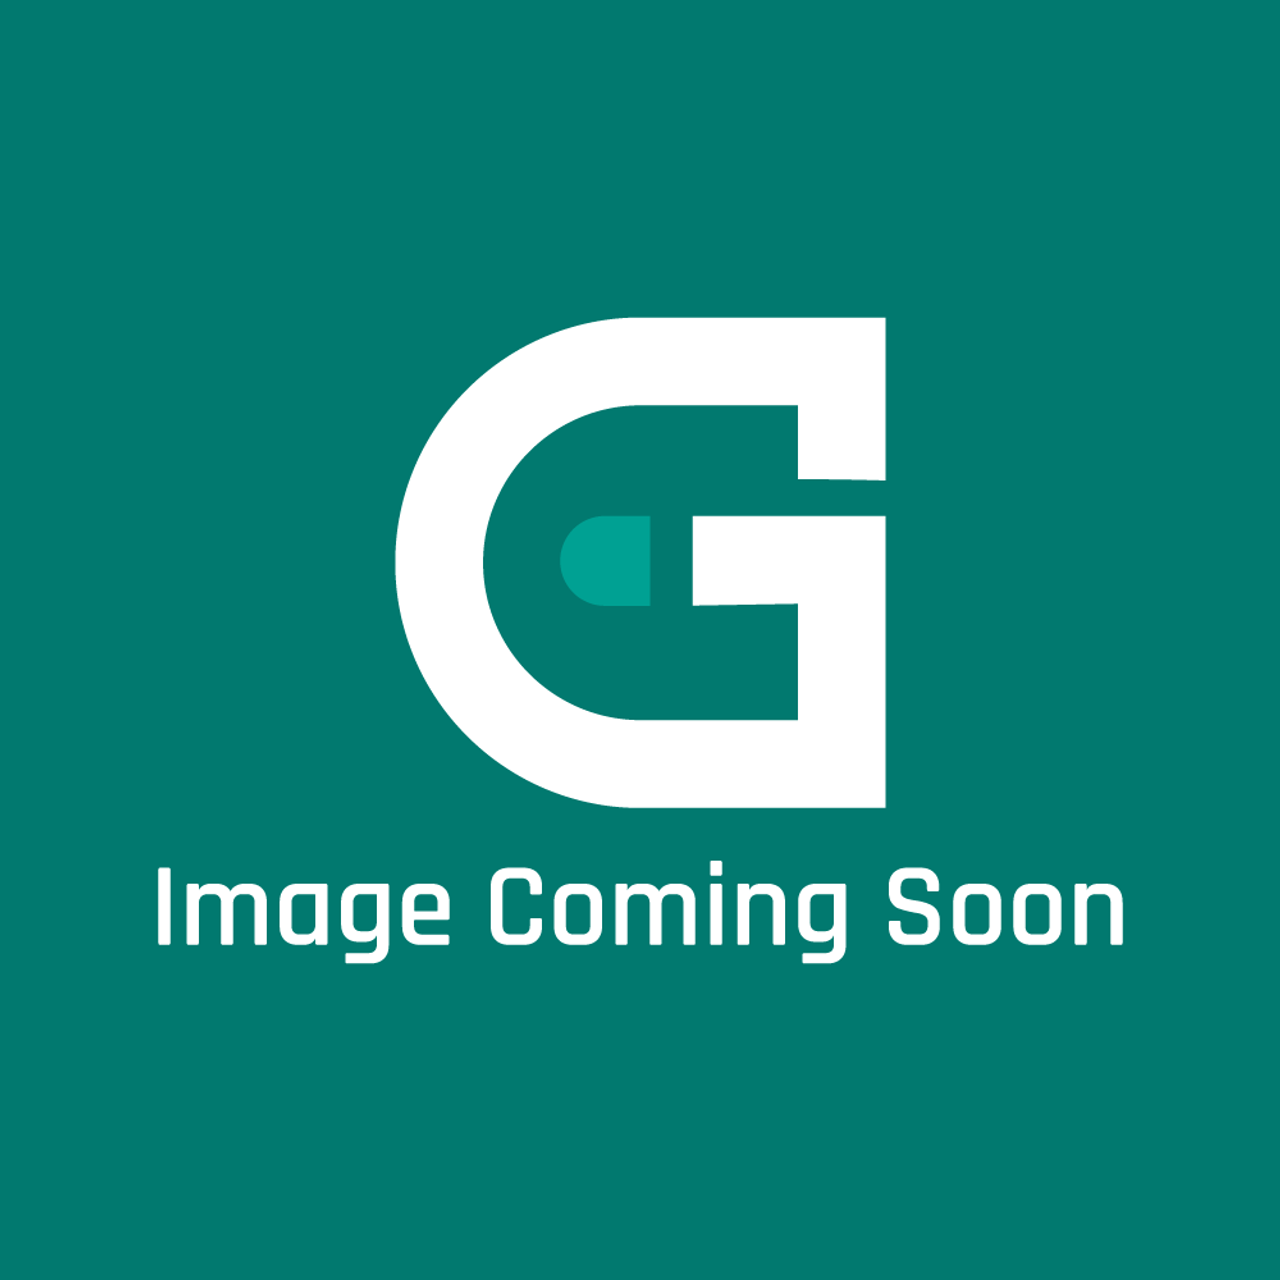 AGA Marvel A4735 - Warning Label Oc Aga - Image Coming Soon!